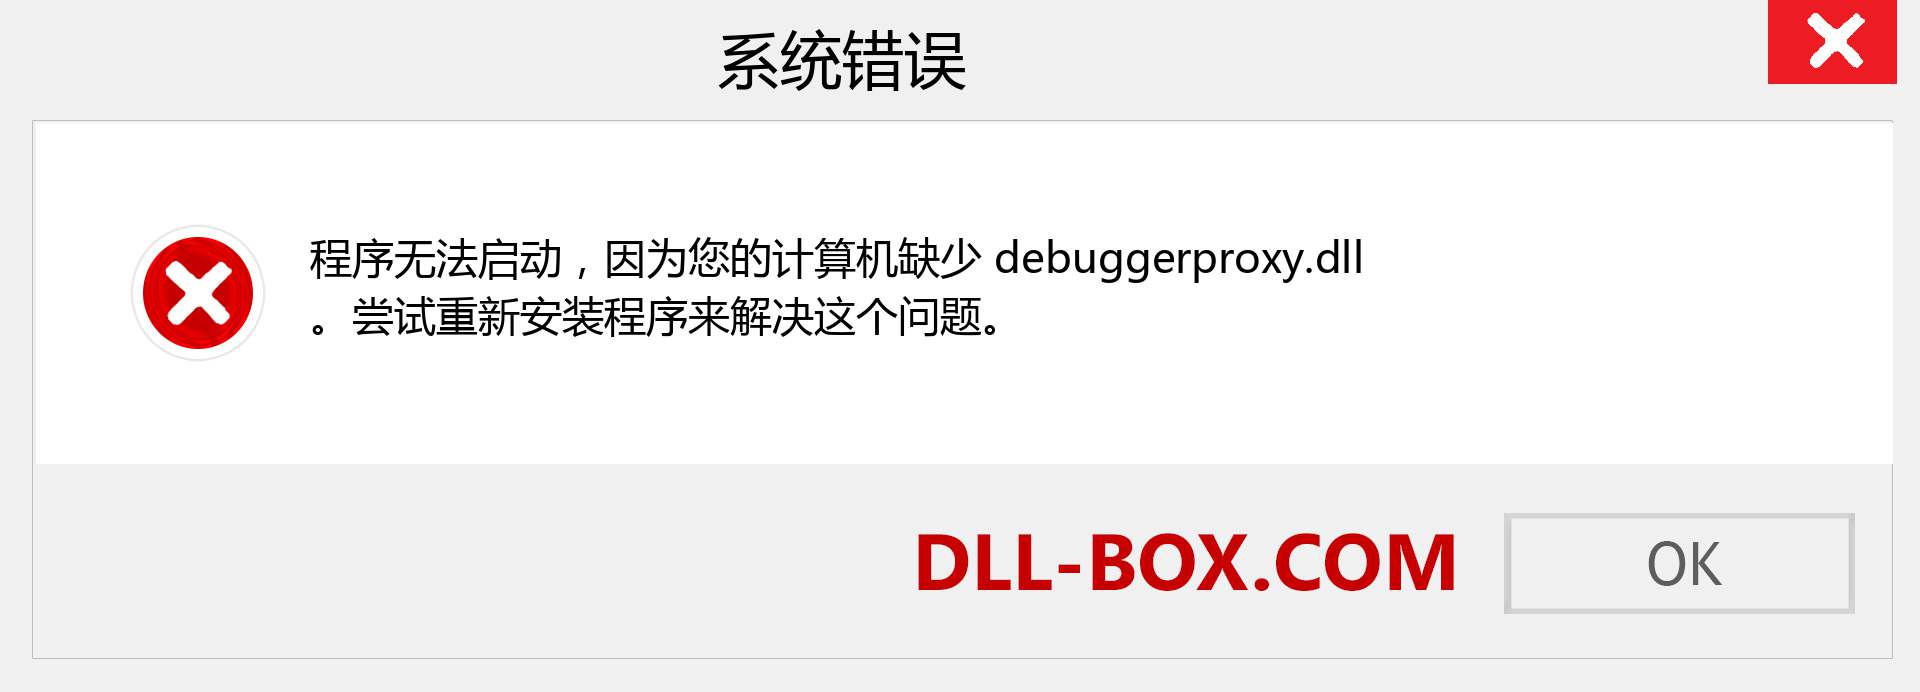 debuggerproxy.dll 文件丢失？。 适用于 Windows 7、8、10 的下载 - 修复 Windows、照片、图像上的 debuggerproxy dll 丢失错误